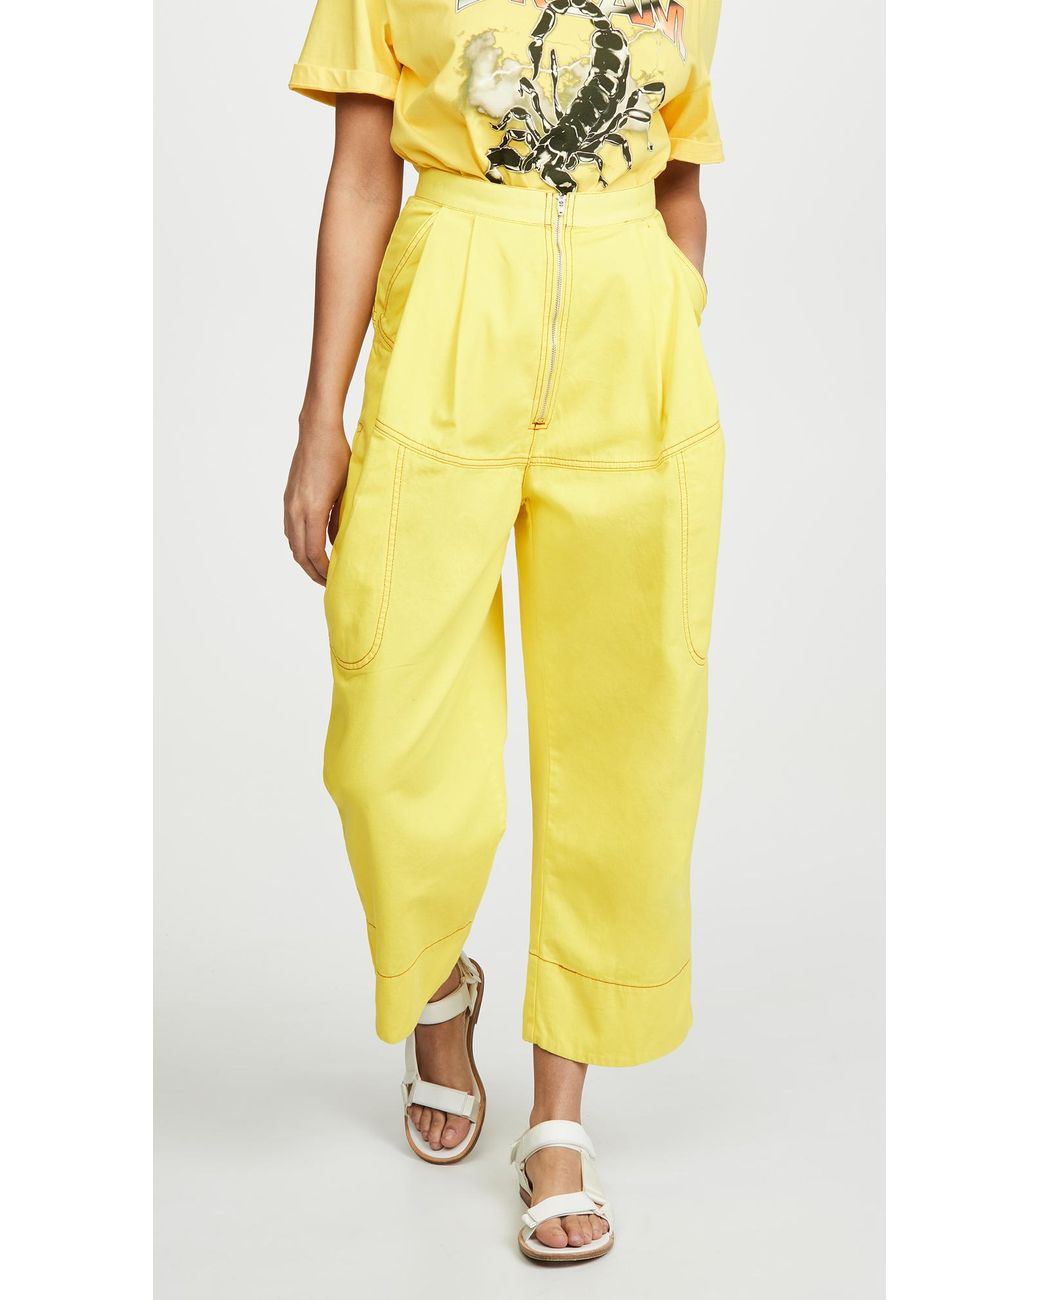 Rachel Comey Denim Bandini Pants in Yellow | Lyst